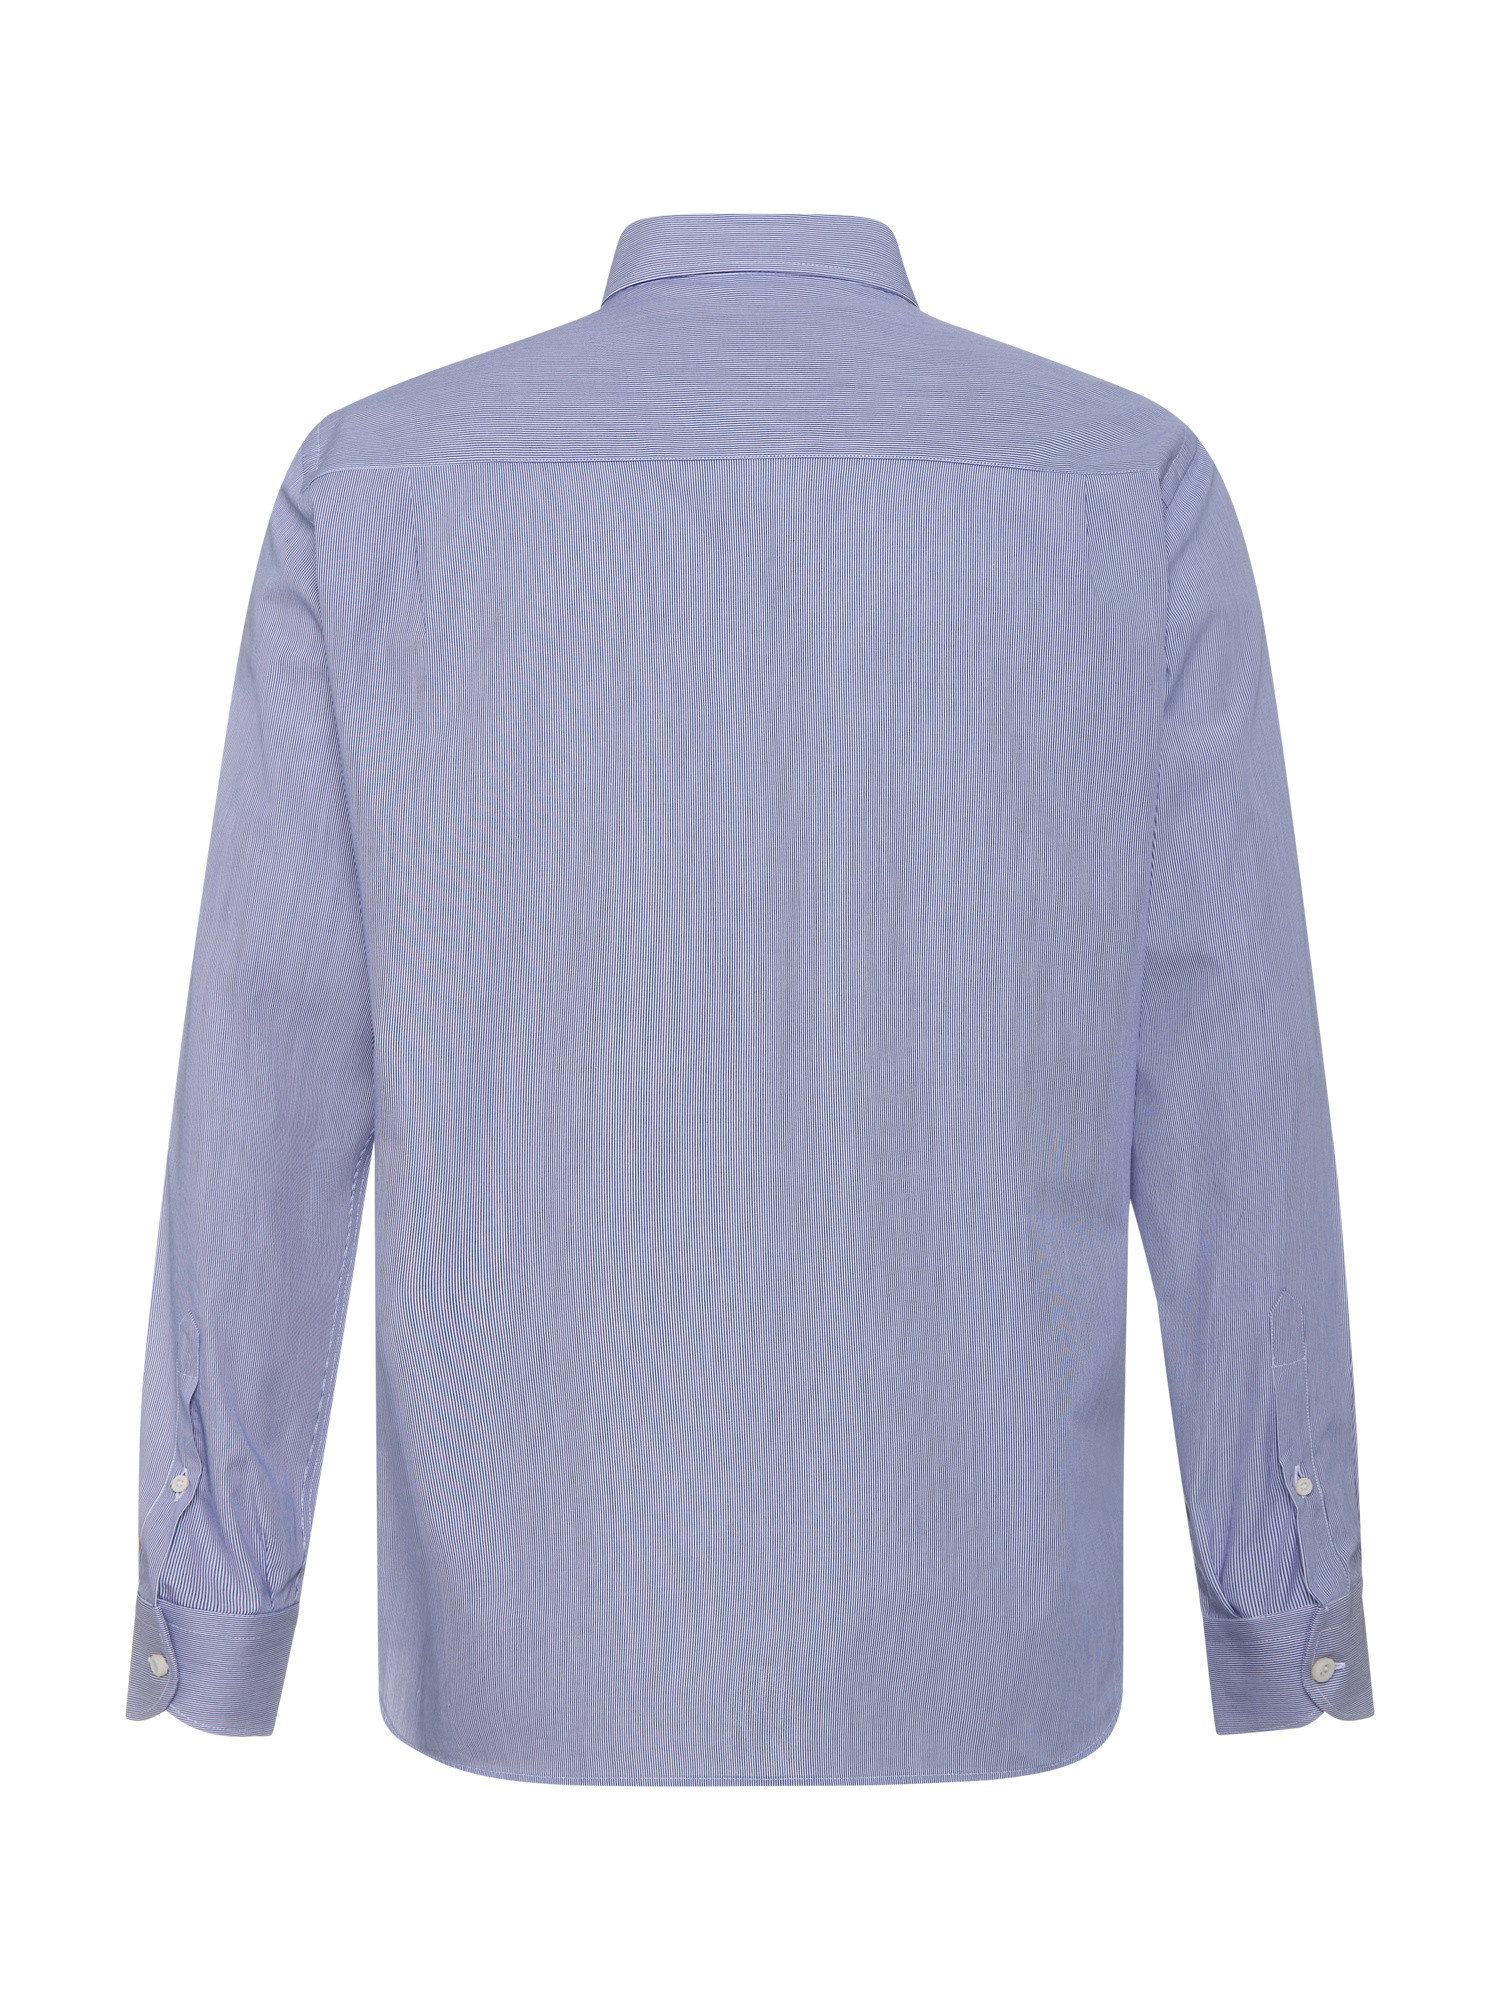 Luca D'Altieri - Regular fit casual shirt in pure cotton poplin, Blue, large image number 2